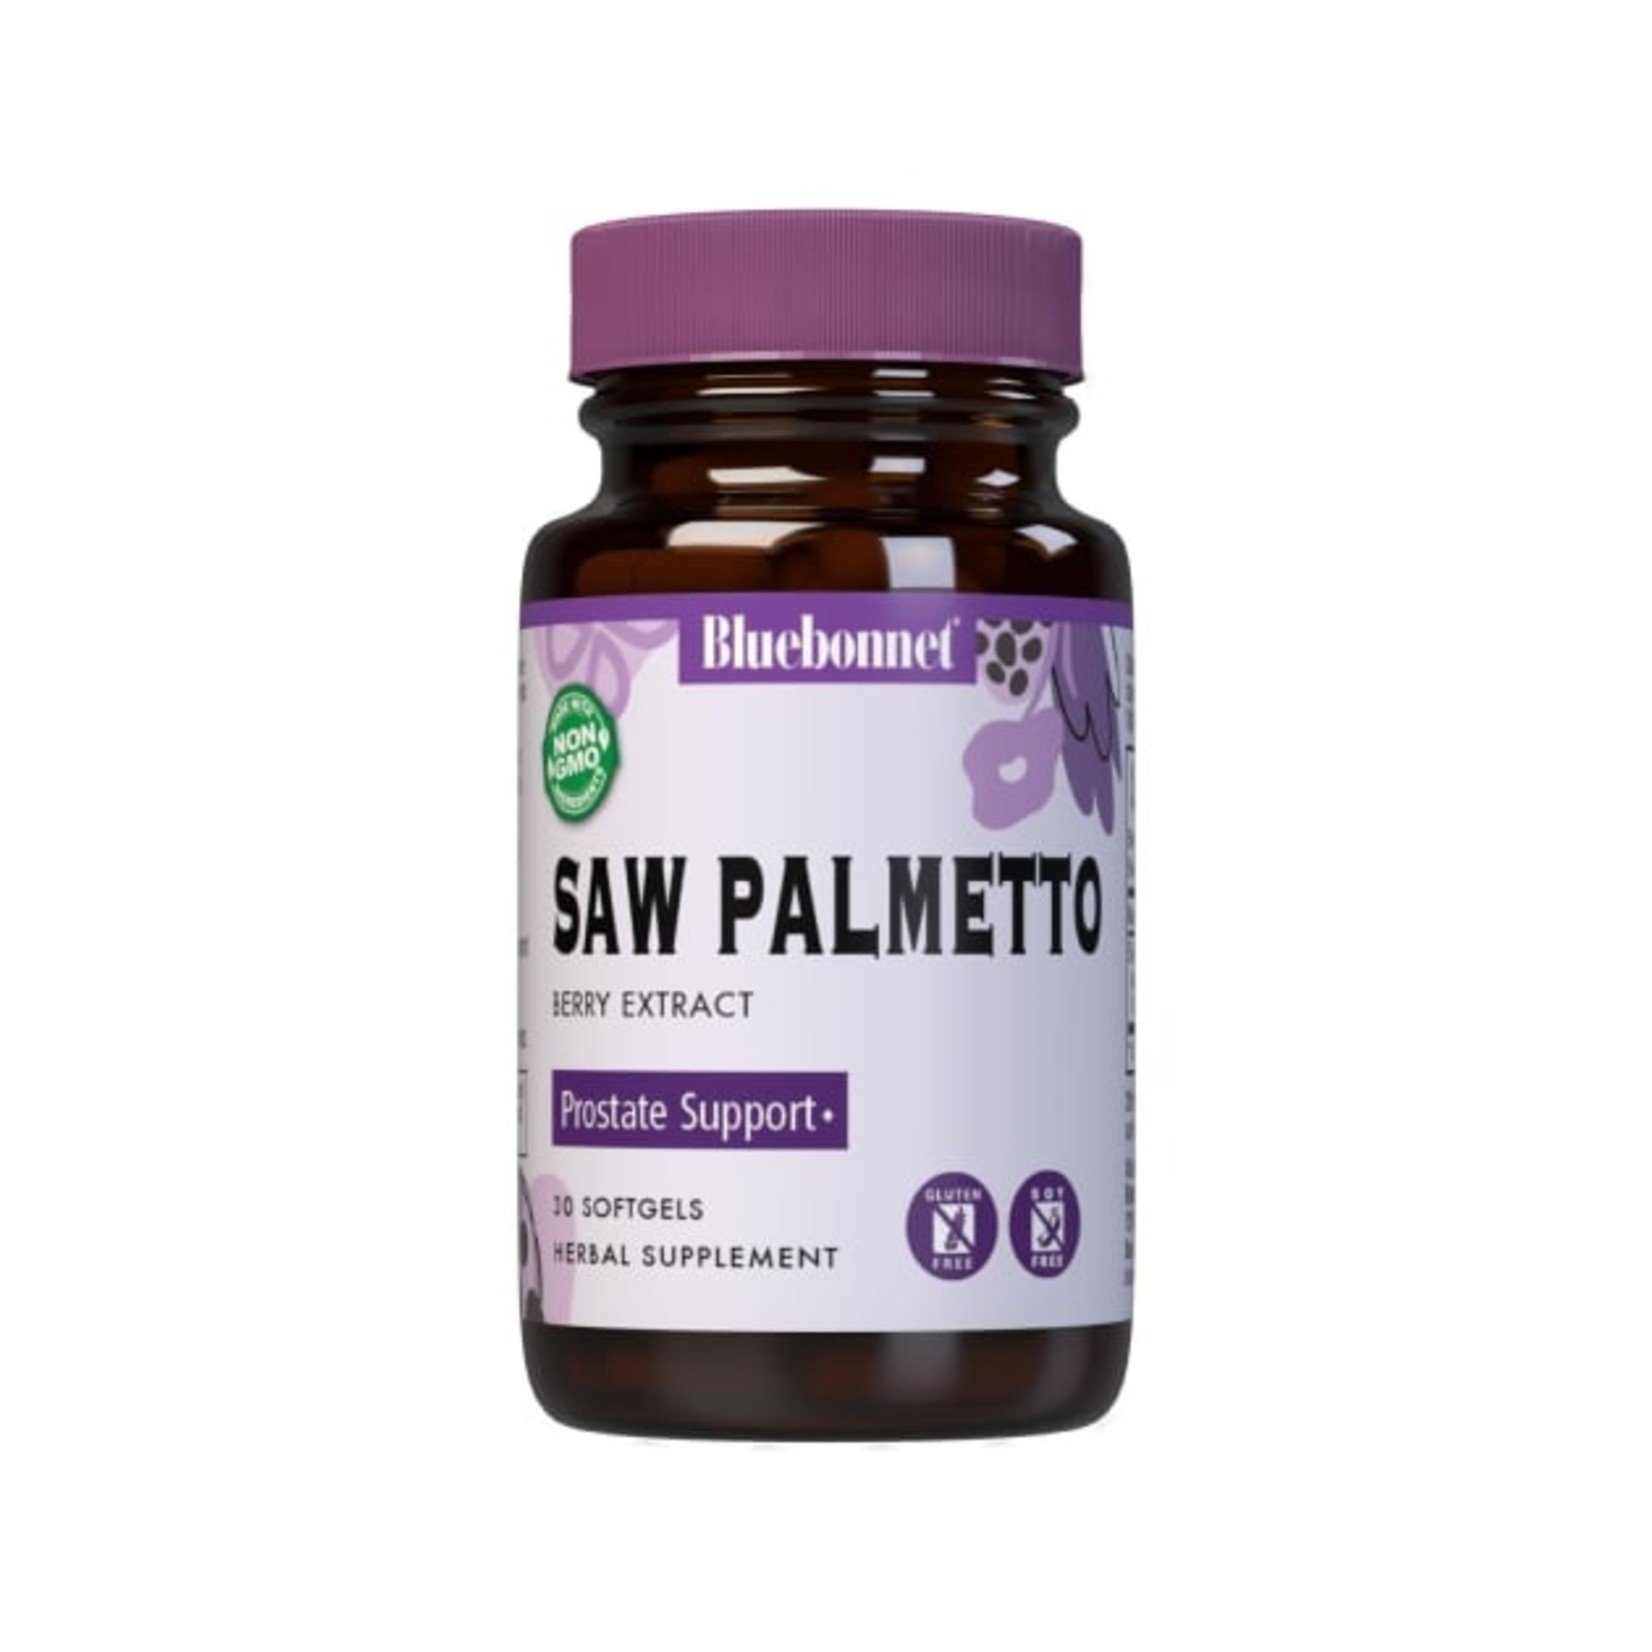 Bluebonnet Bluebonnet - Saw Palmetto Berry Extract - 30 Softgels